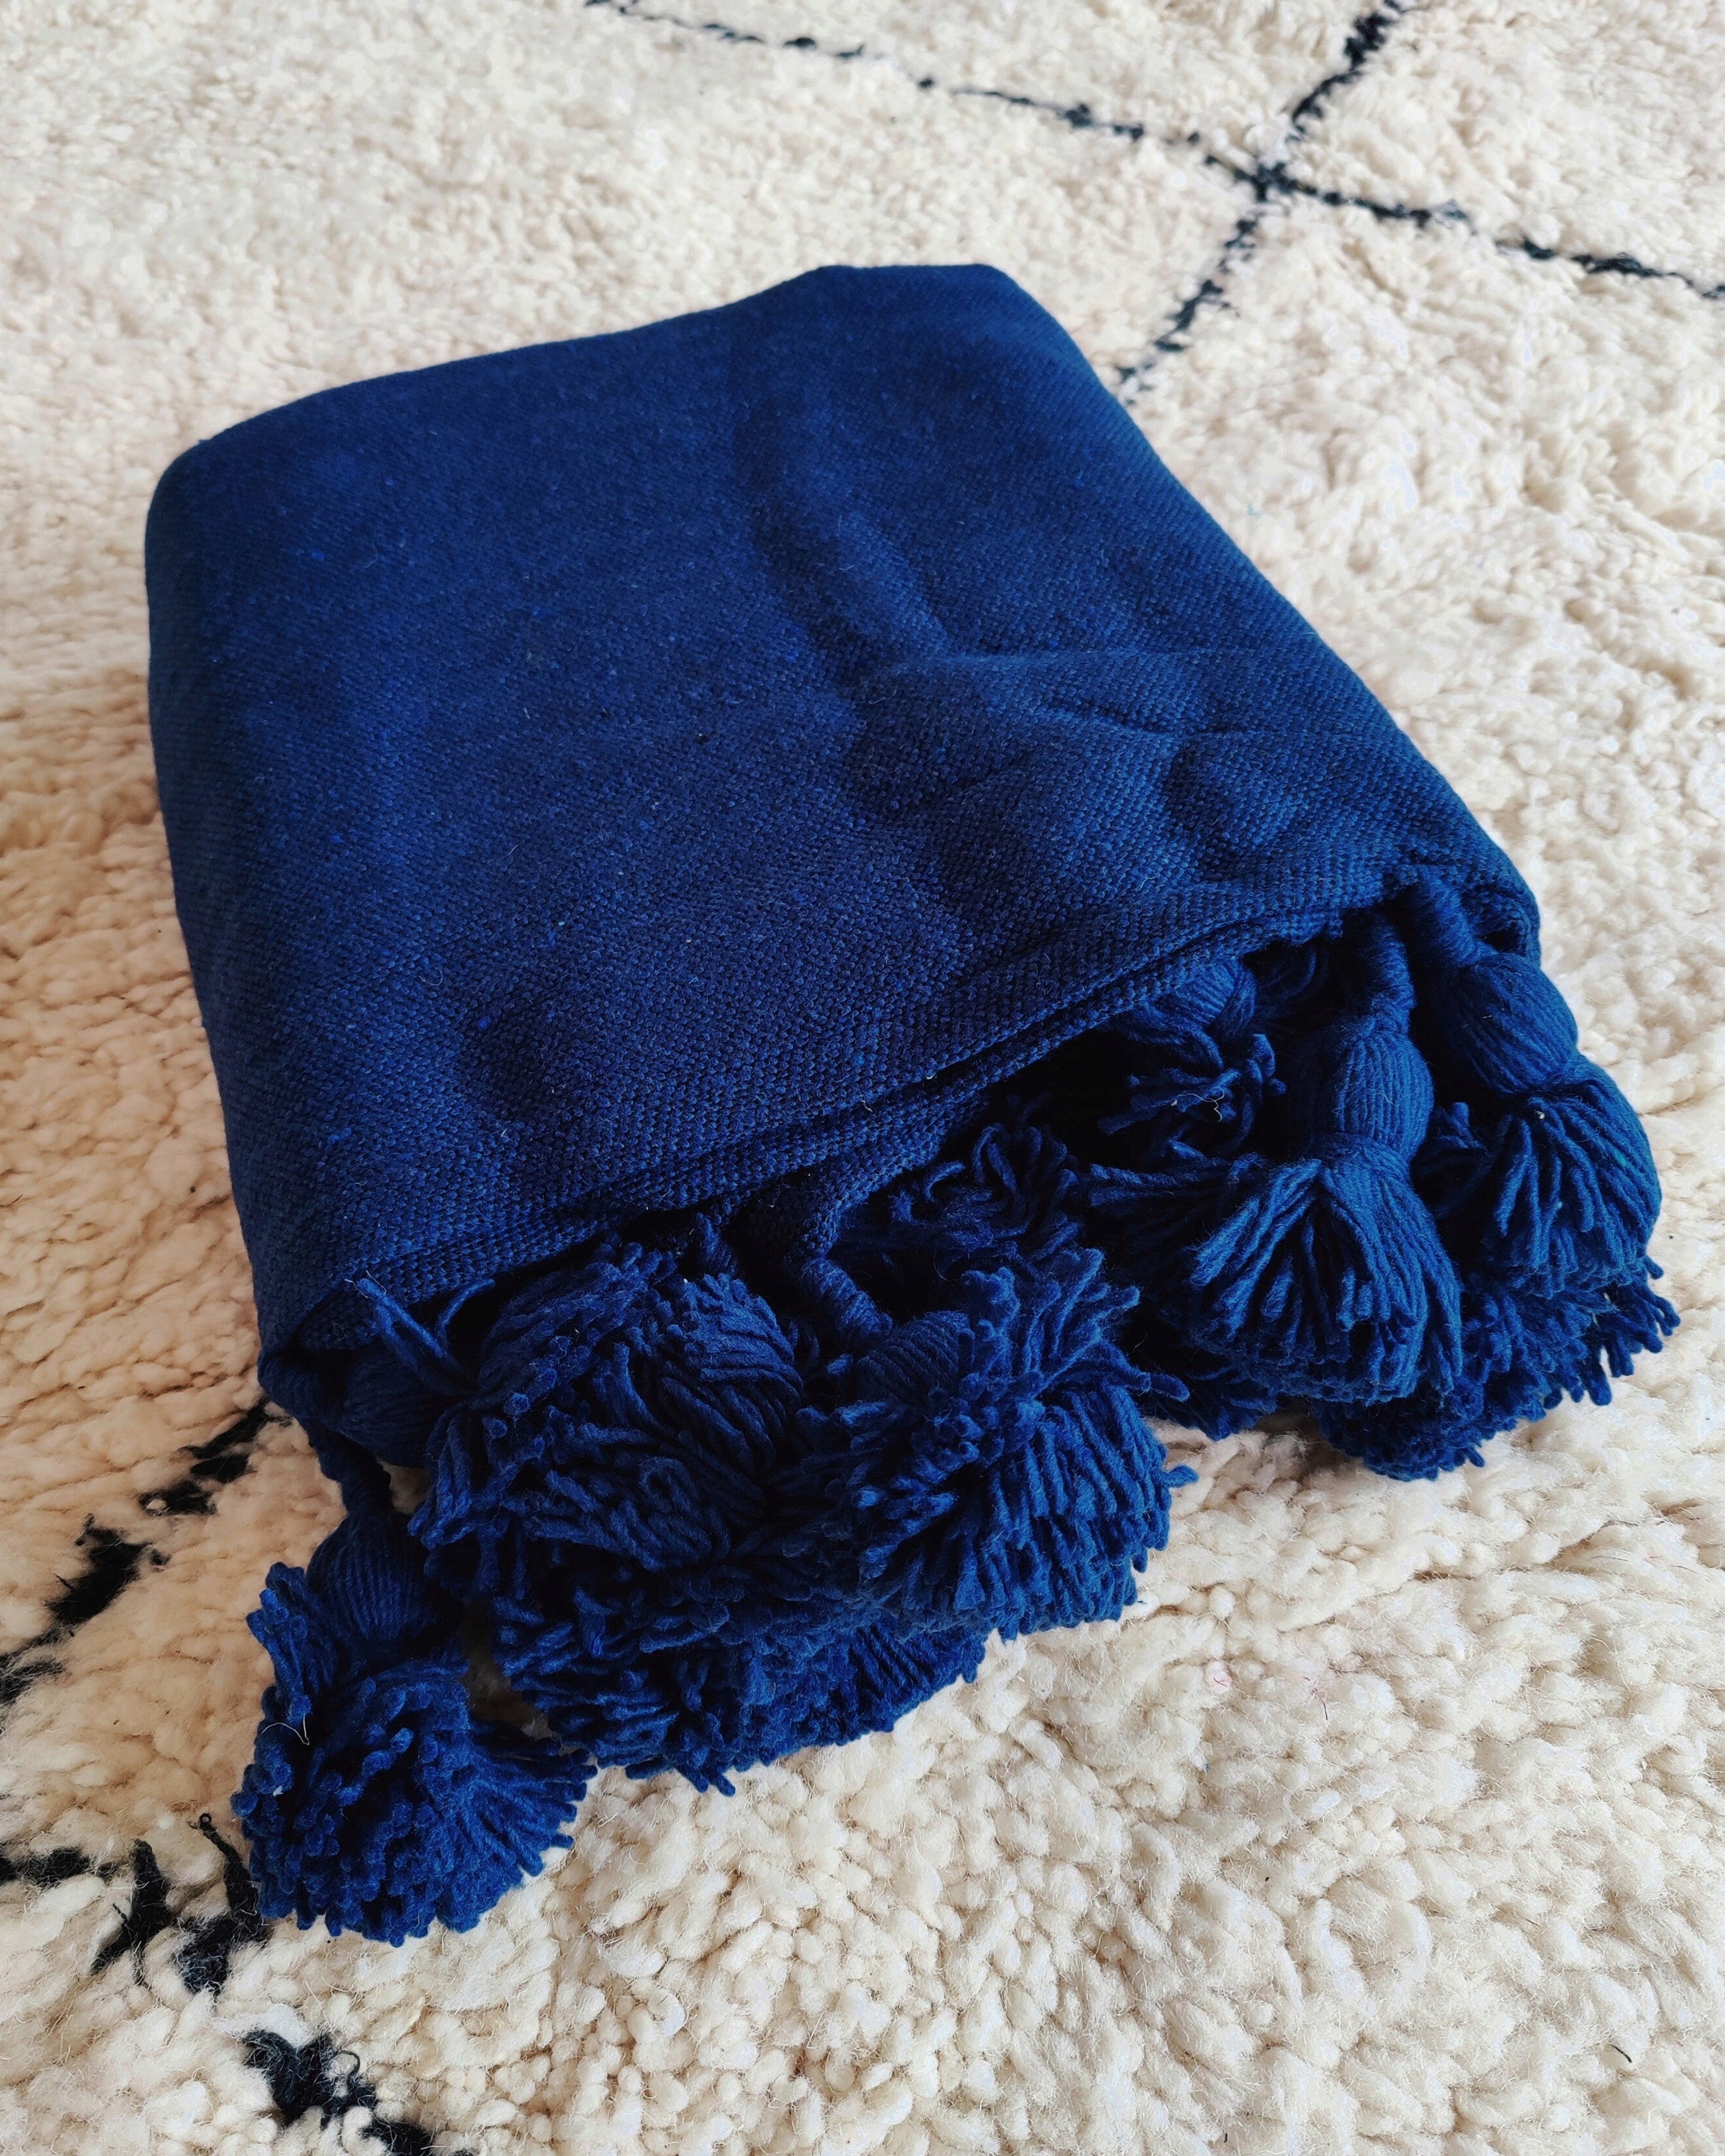 Buy pompom blankets - 8 colors online